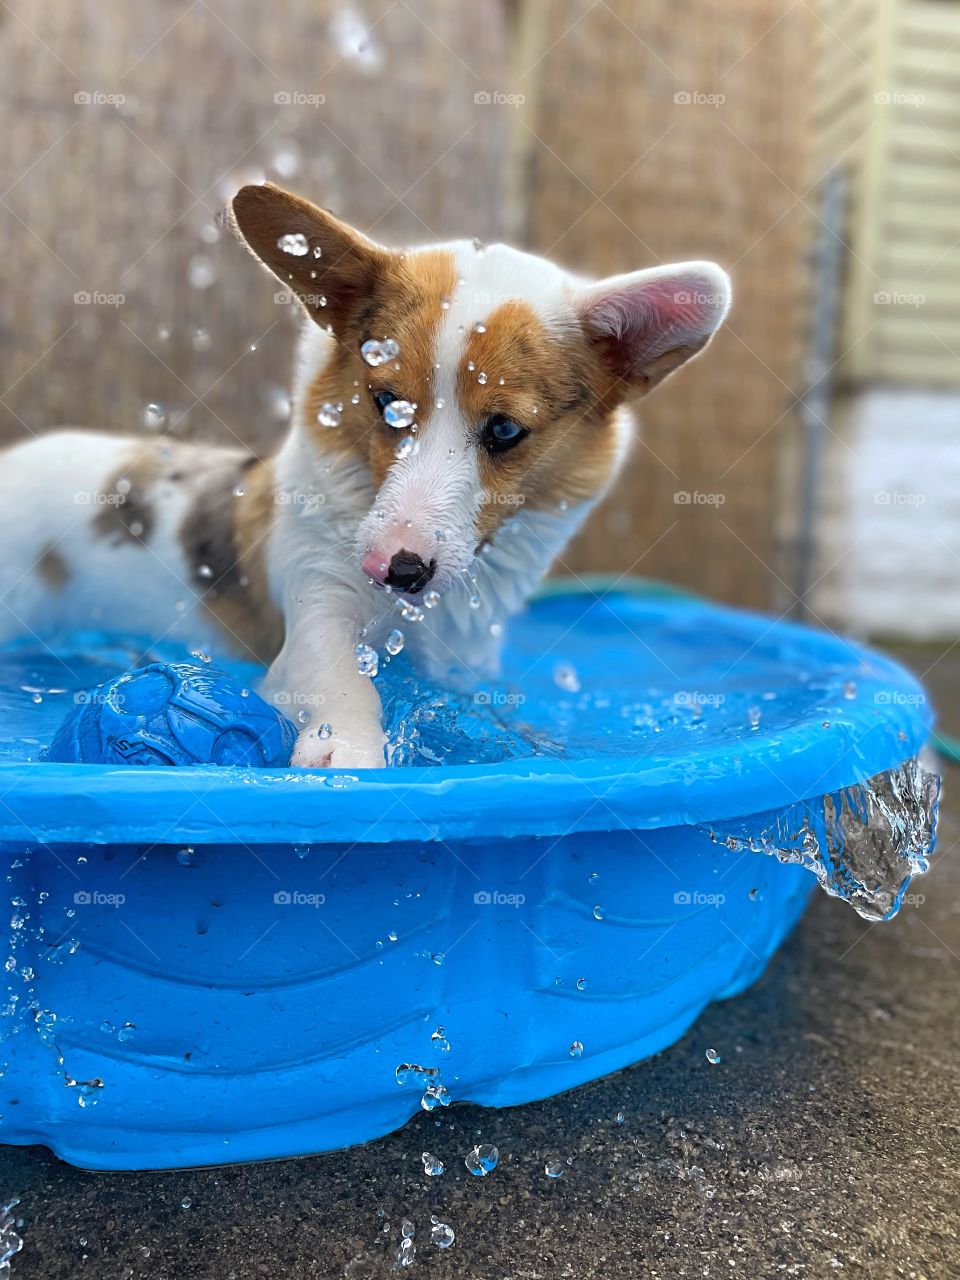 Cute adorable corgi playing pool water wet blue eyed dog animals pets happy fun summer